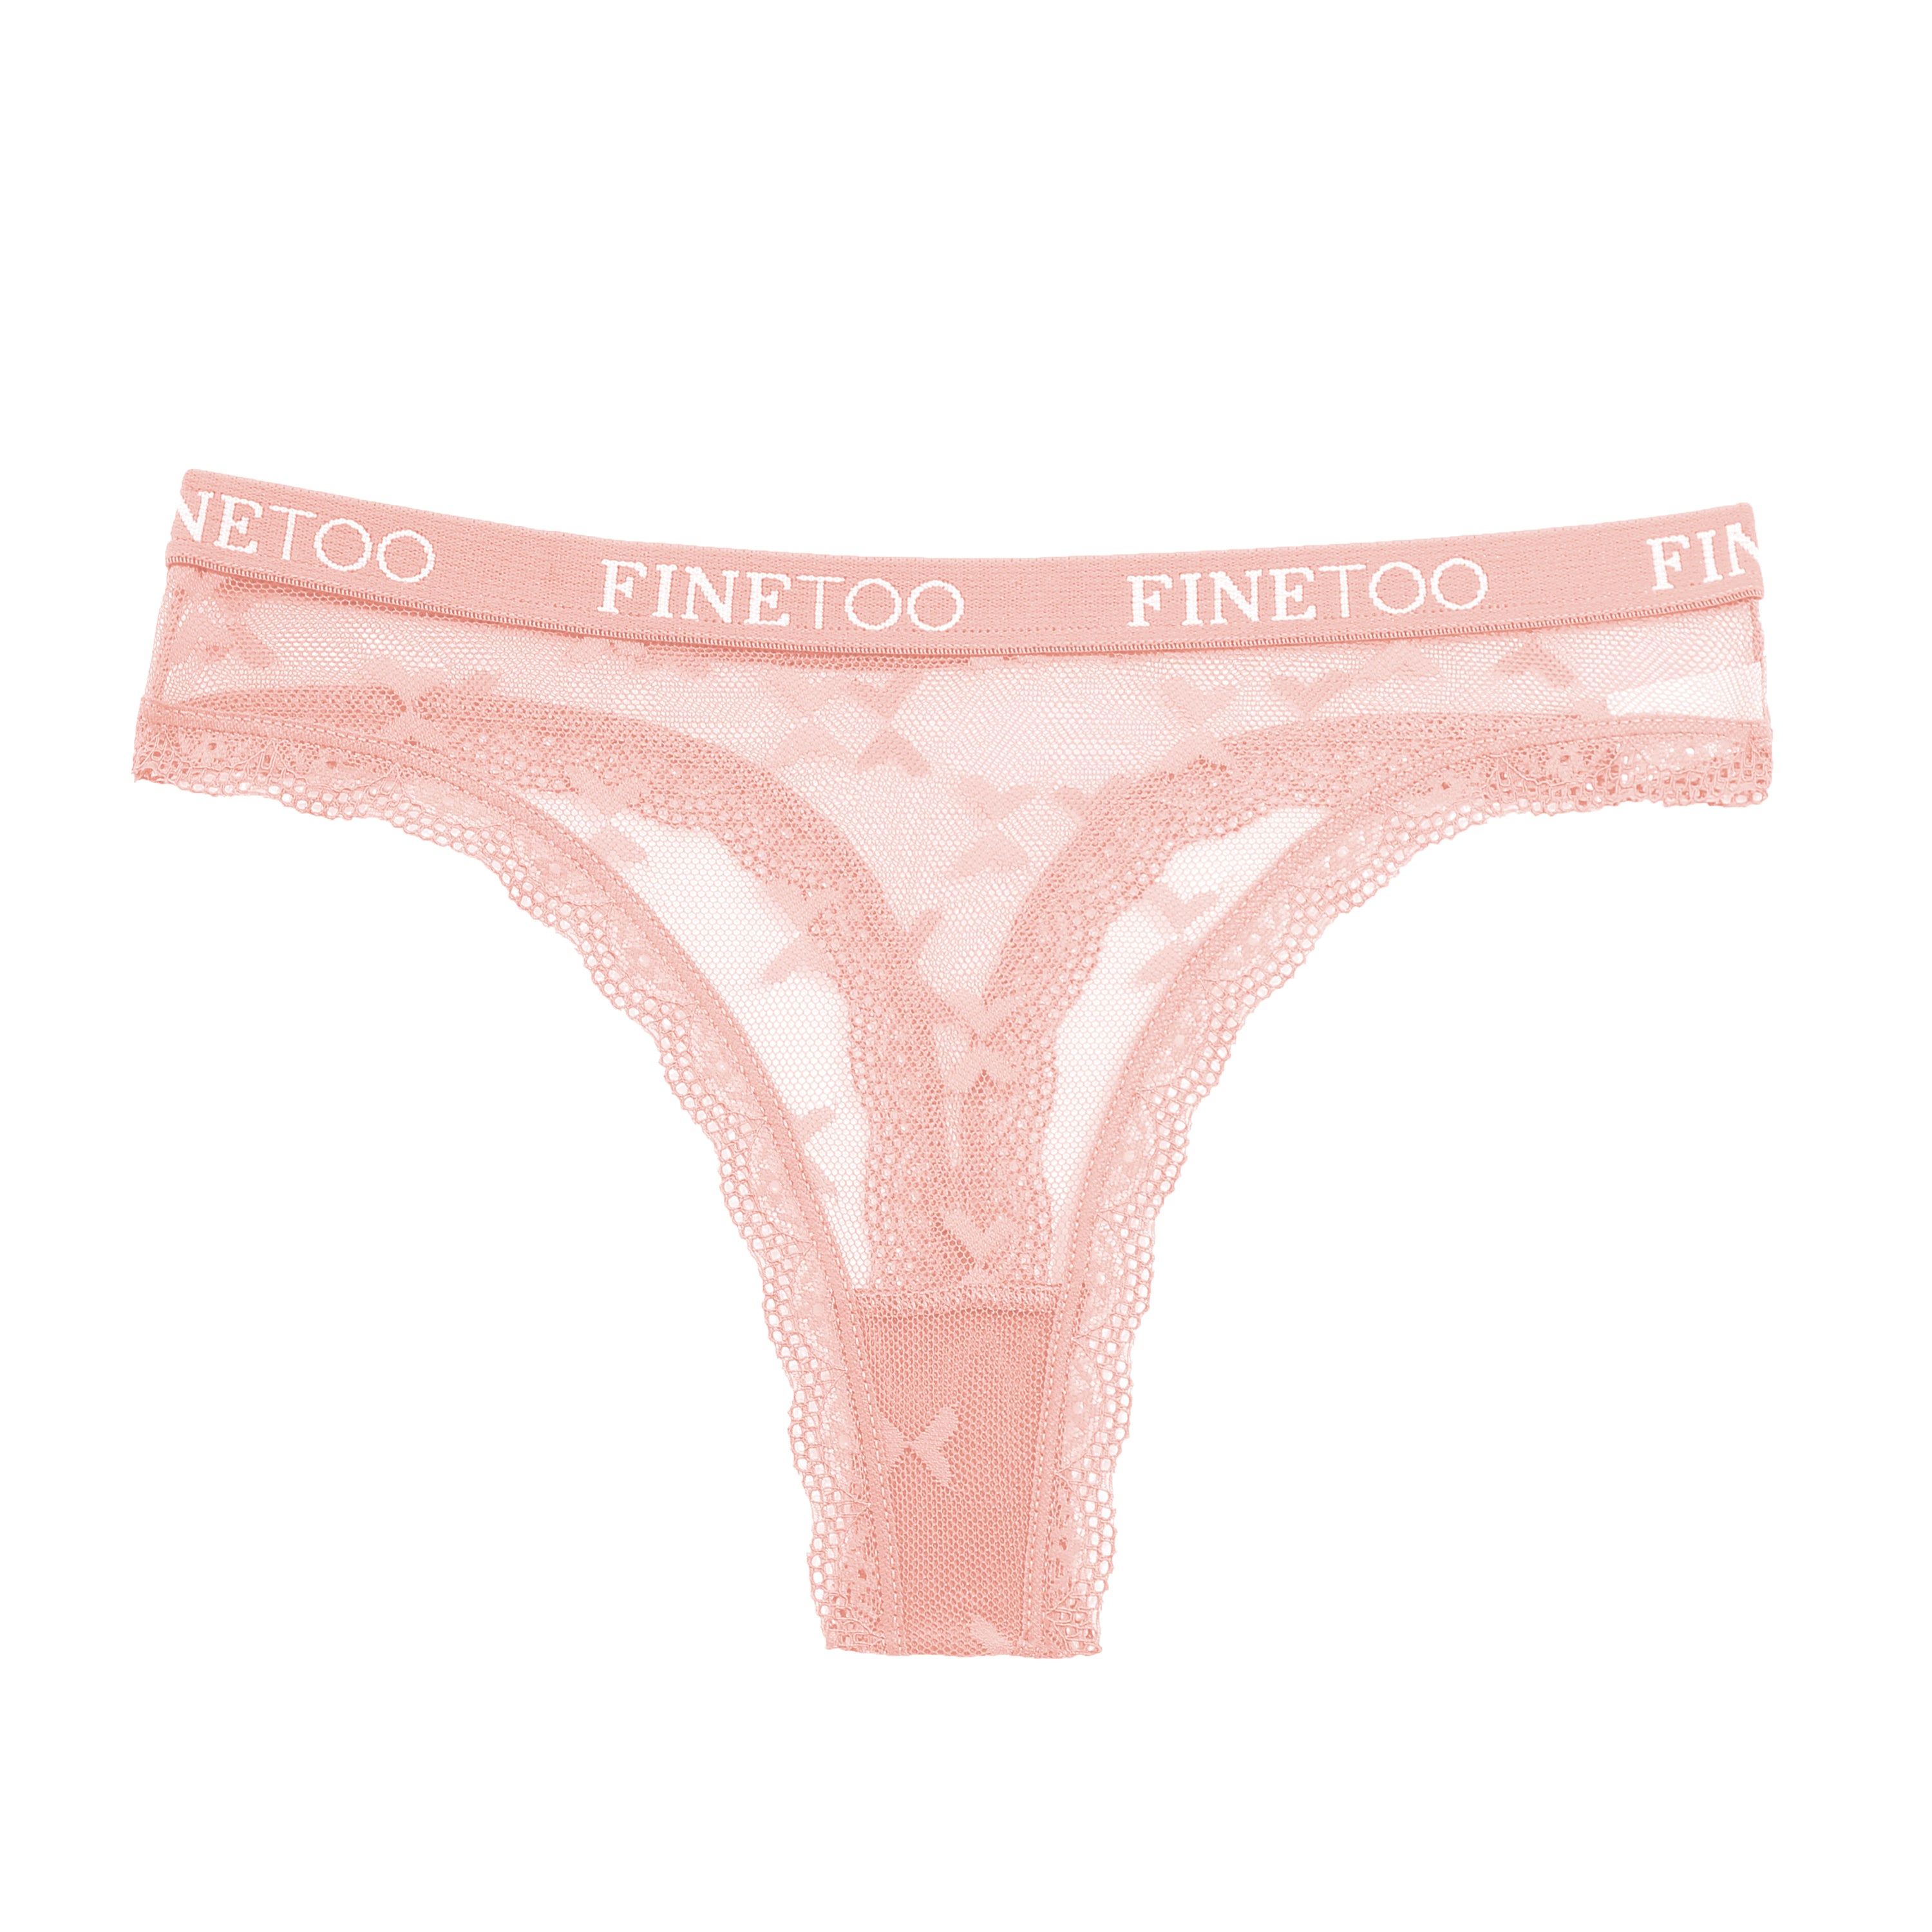 Sexy Cotton Underwear Women, Cotton Panties Women, Finetoo Women's Panties